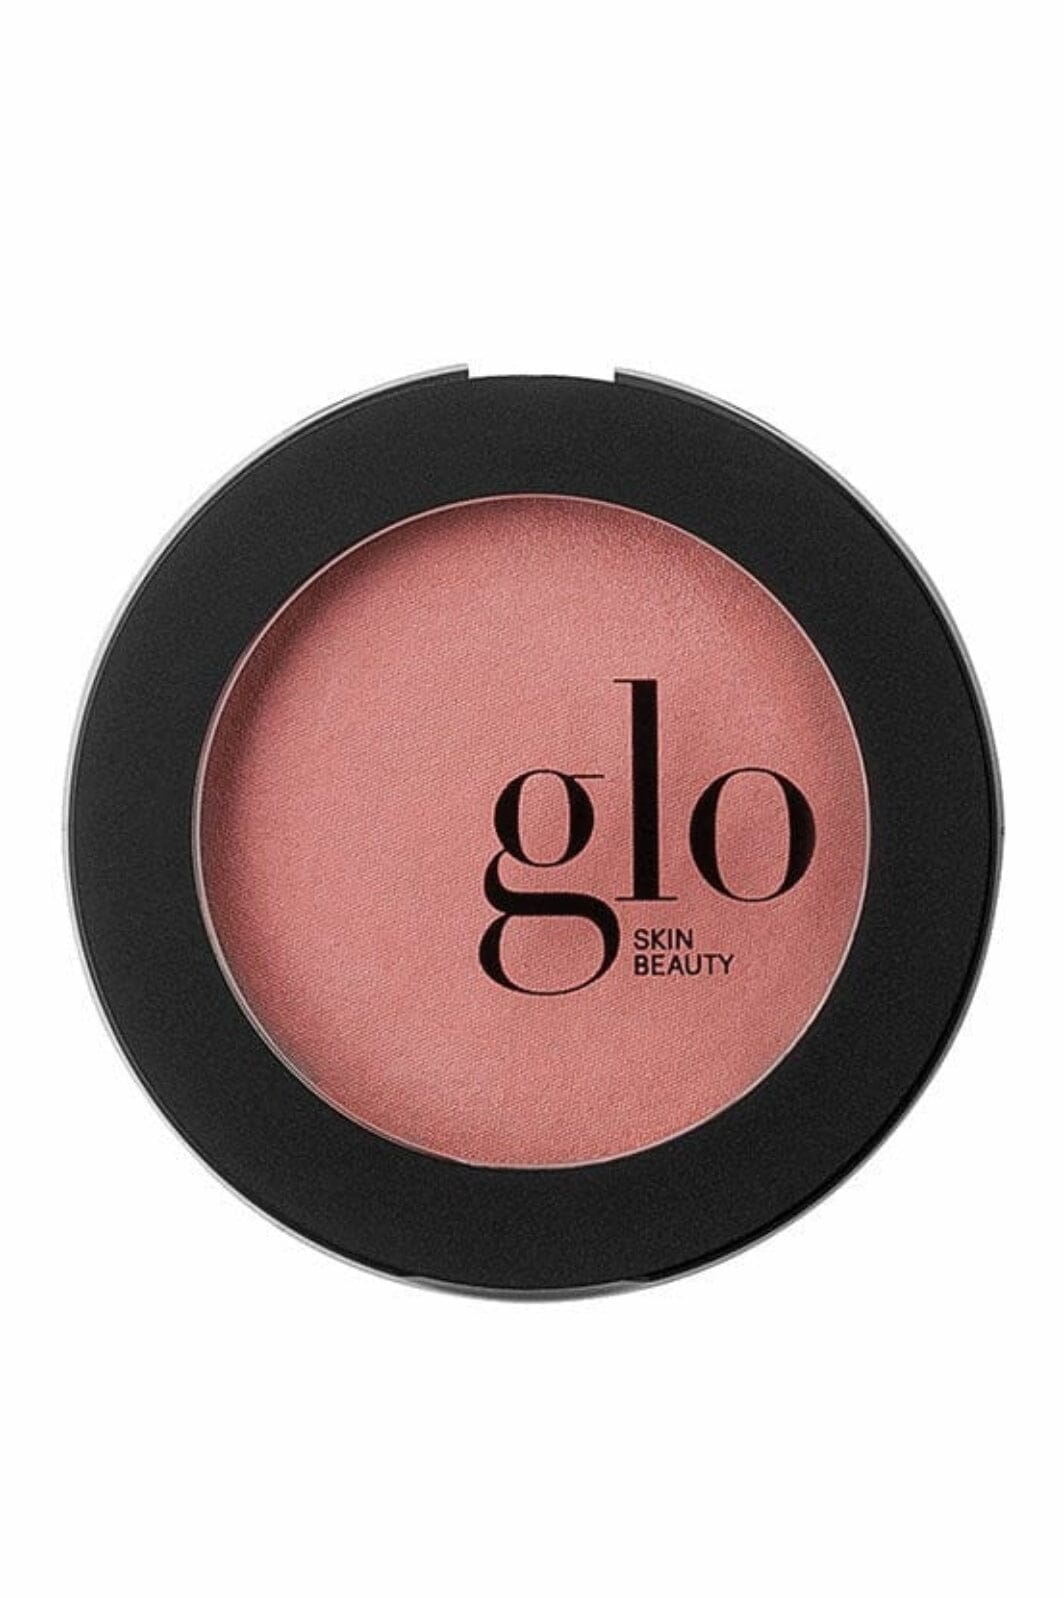 Glo Skin Beauty - Glo Blush - Sheer Petal, 3,4 g Blush 